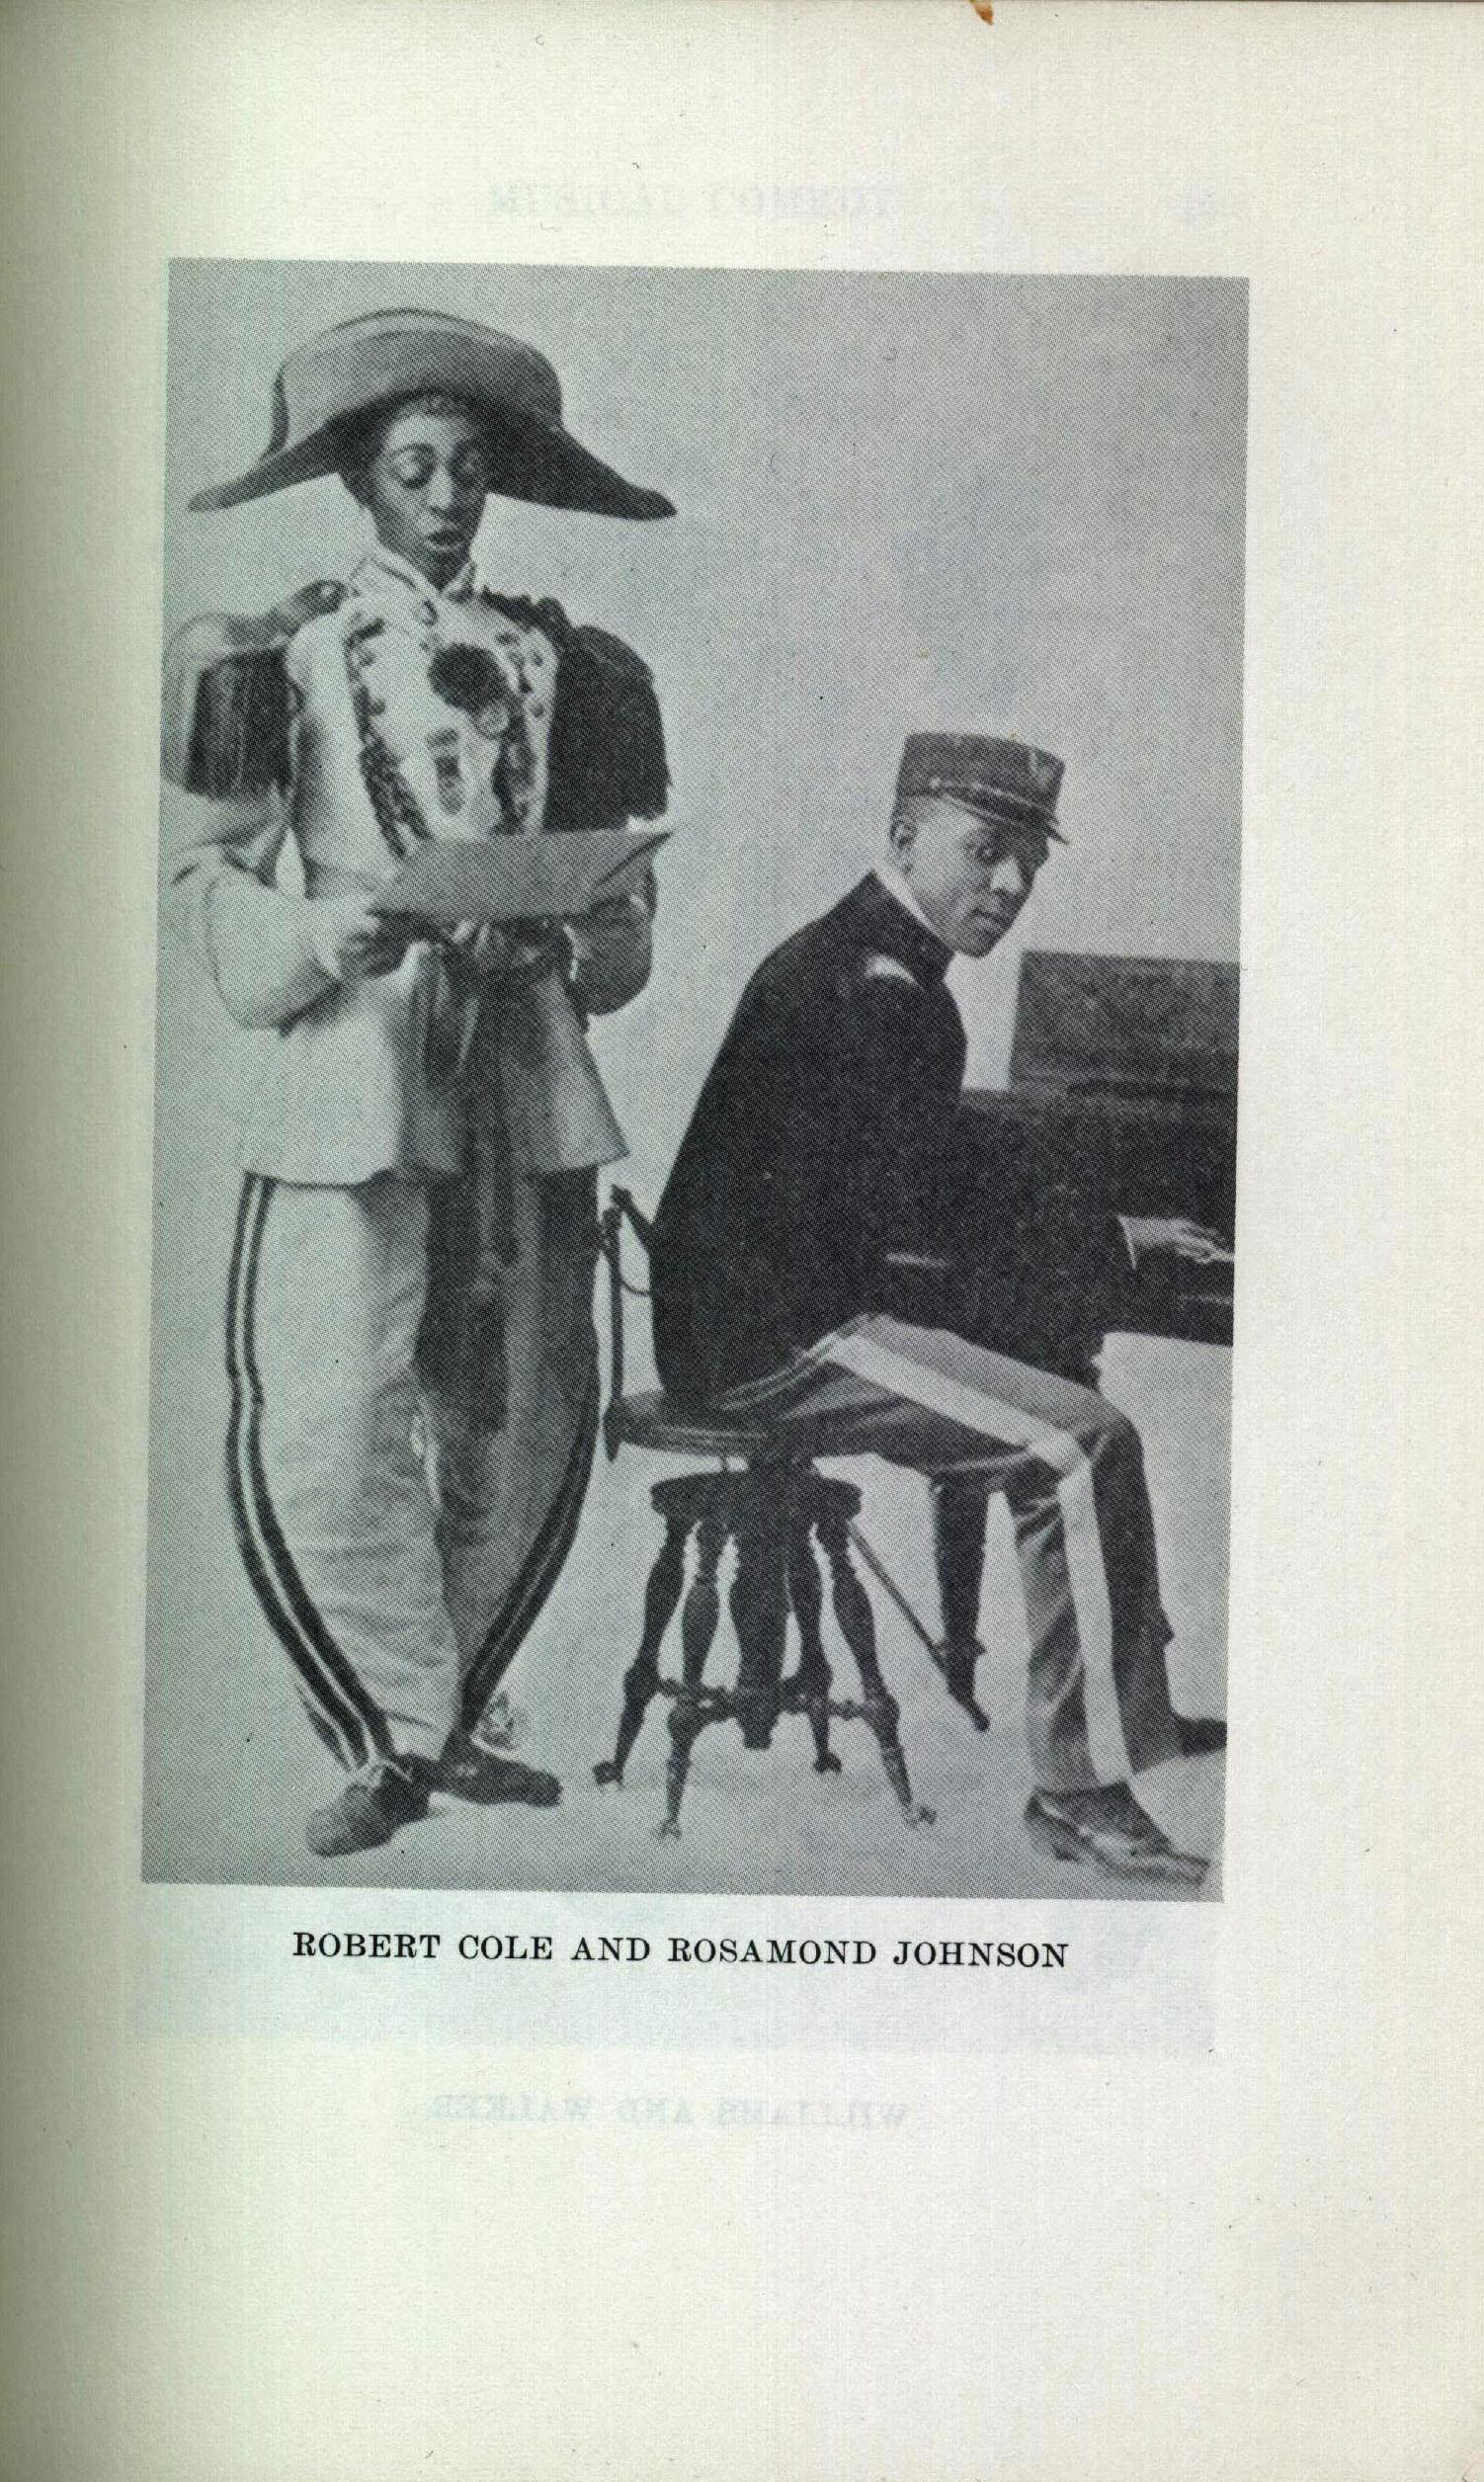 Robert Cole and J. Rosamund Johnson